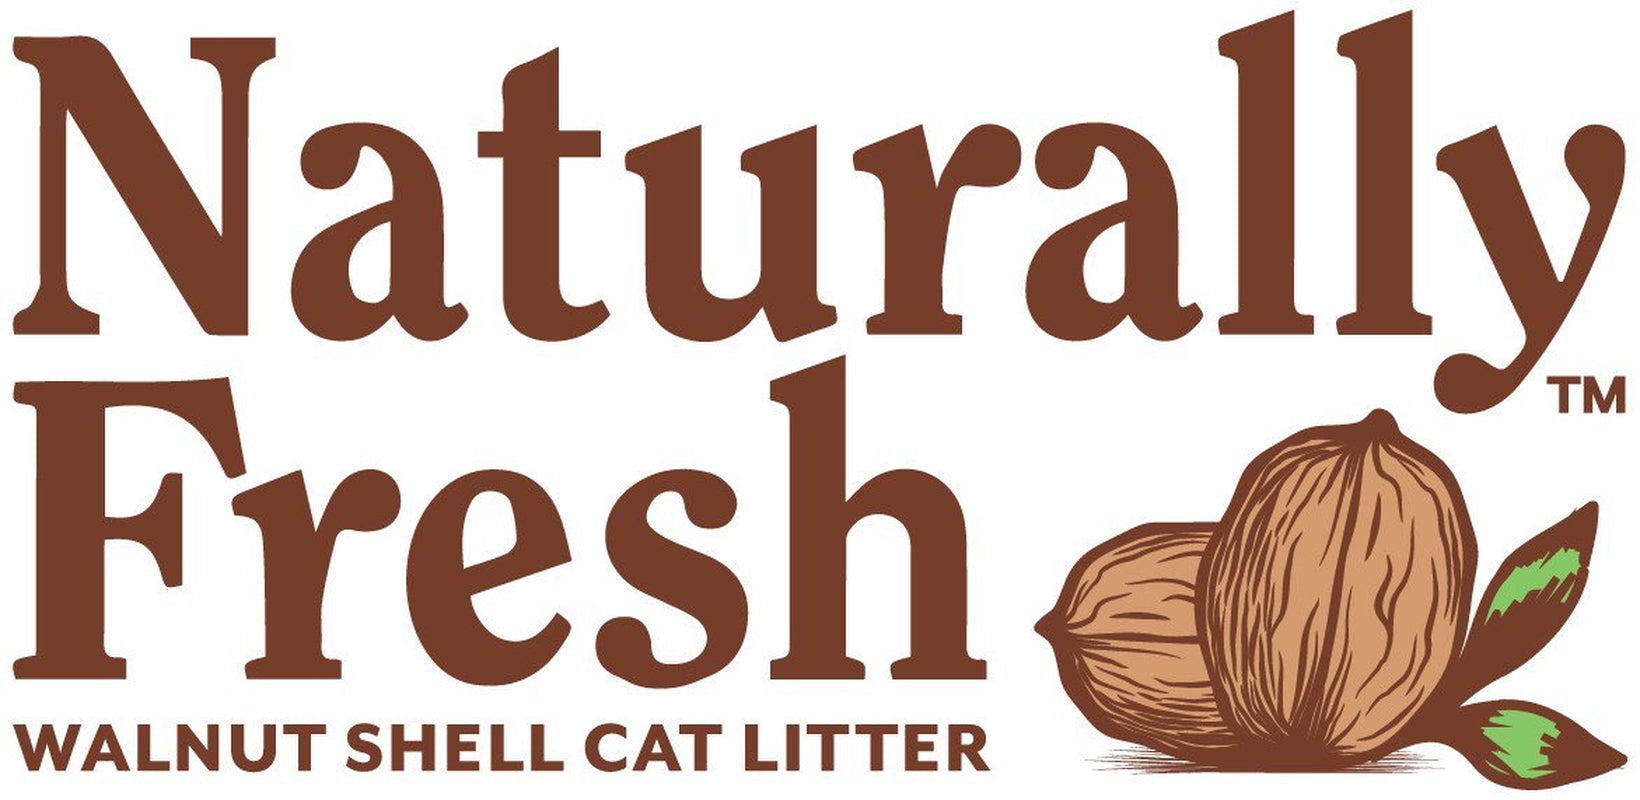 Naturally Fresh Walnut-Based Ultra-Odor Control Multi-Cat Quick-Clumping Cat Litter 26 Lb. Bag Animals & Pet Supplies > Pet Supplies > Cat Supplies > Cat Litter Eco-Shell, LP   